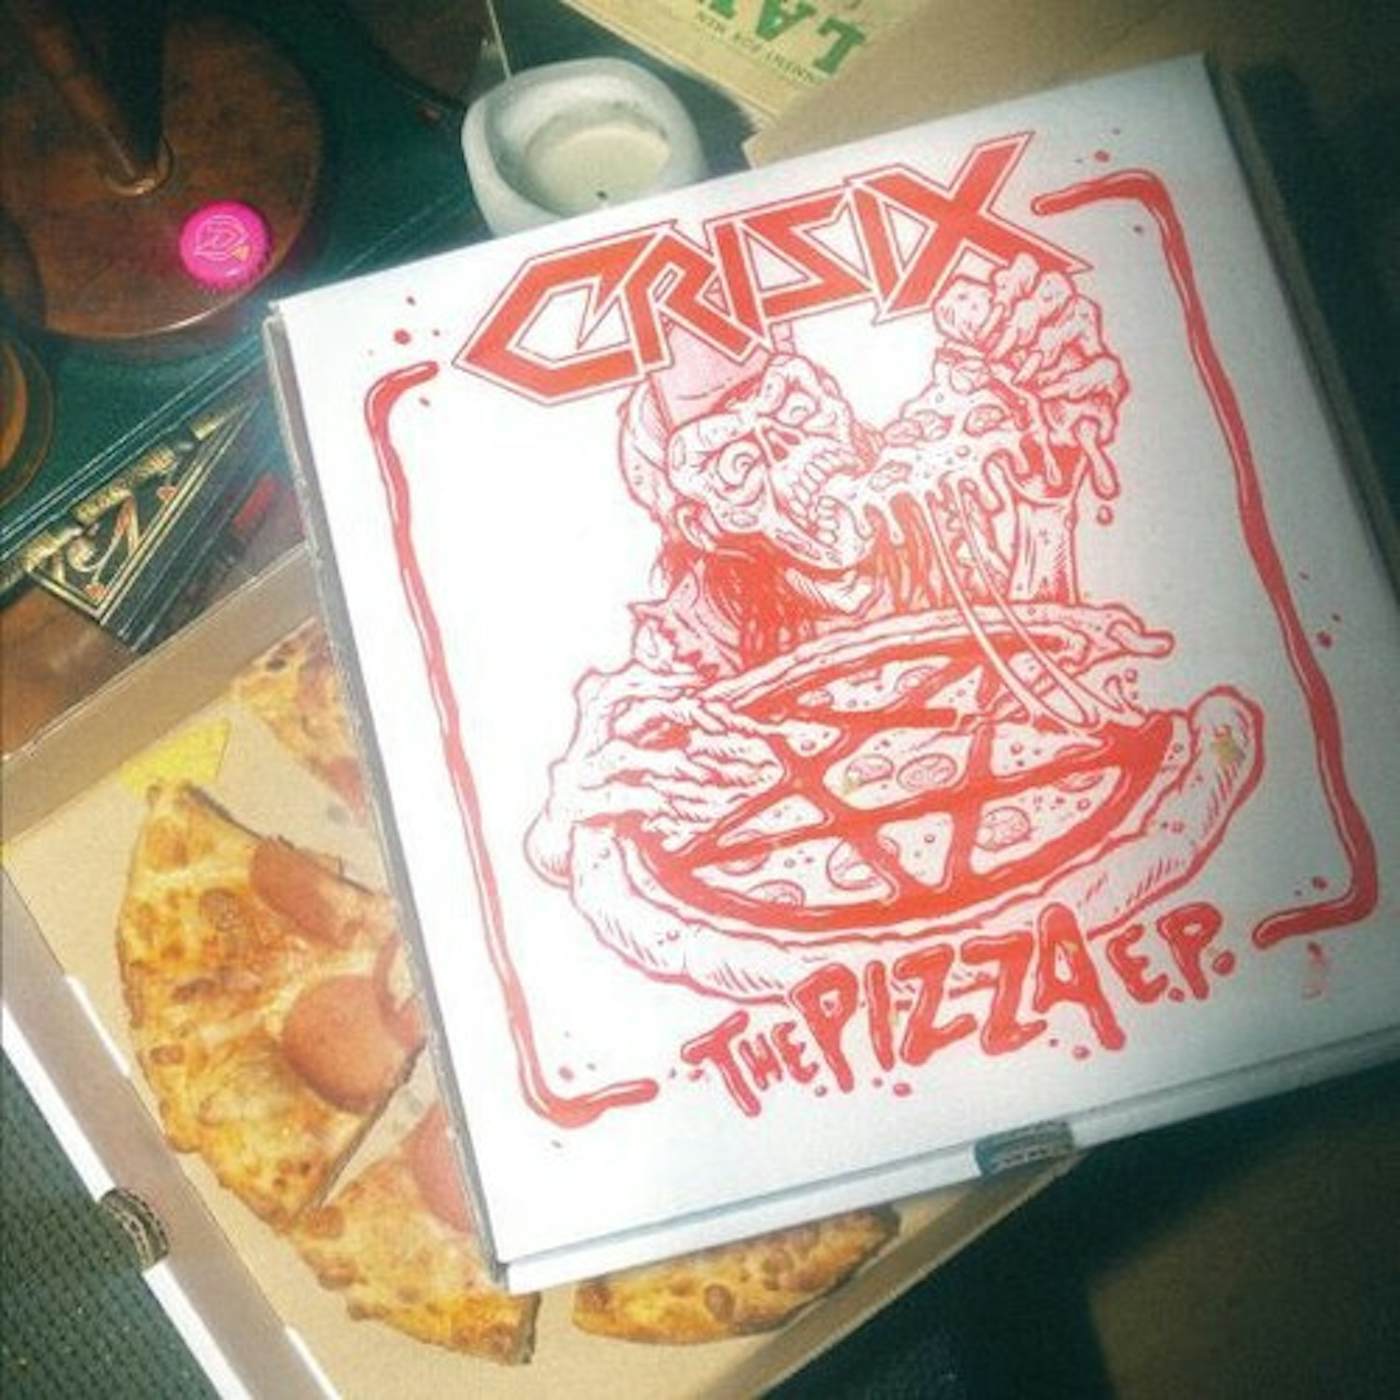 Crisix PIZZA EP CD